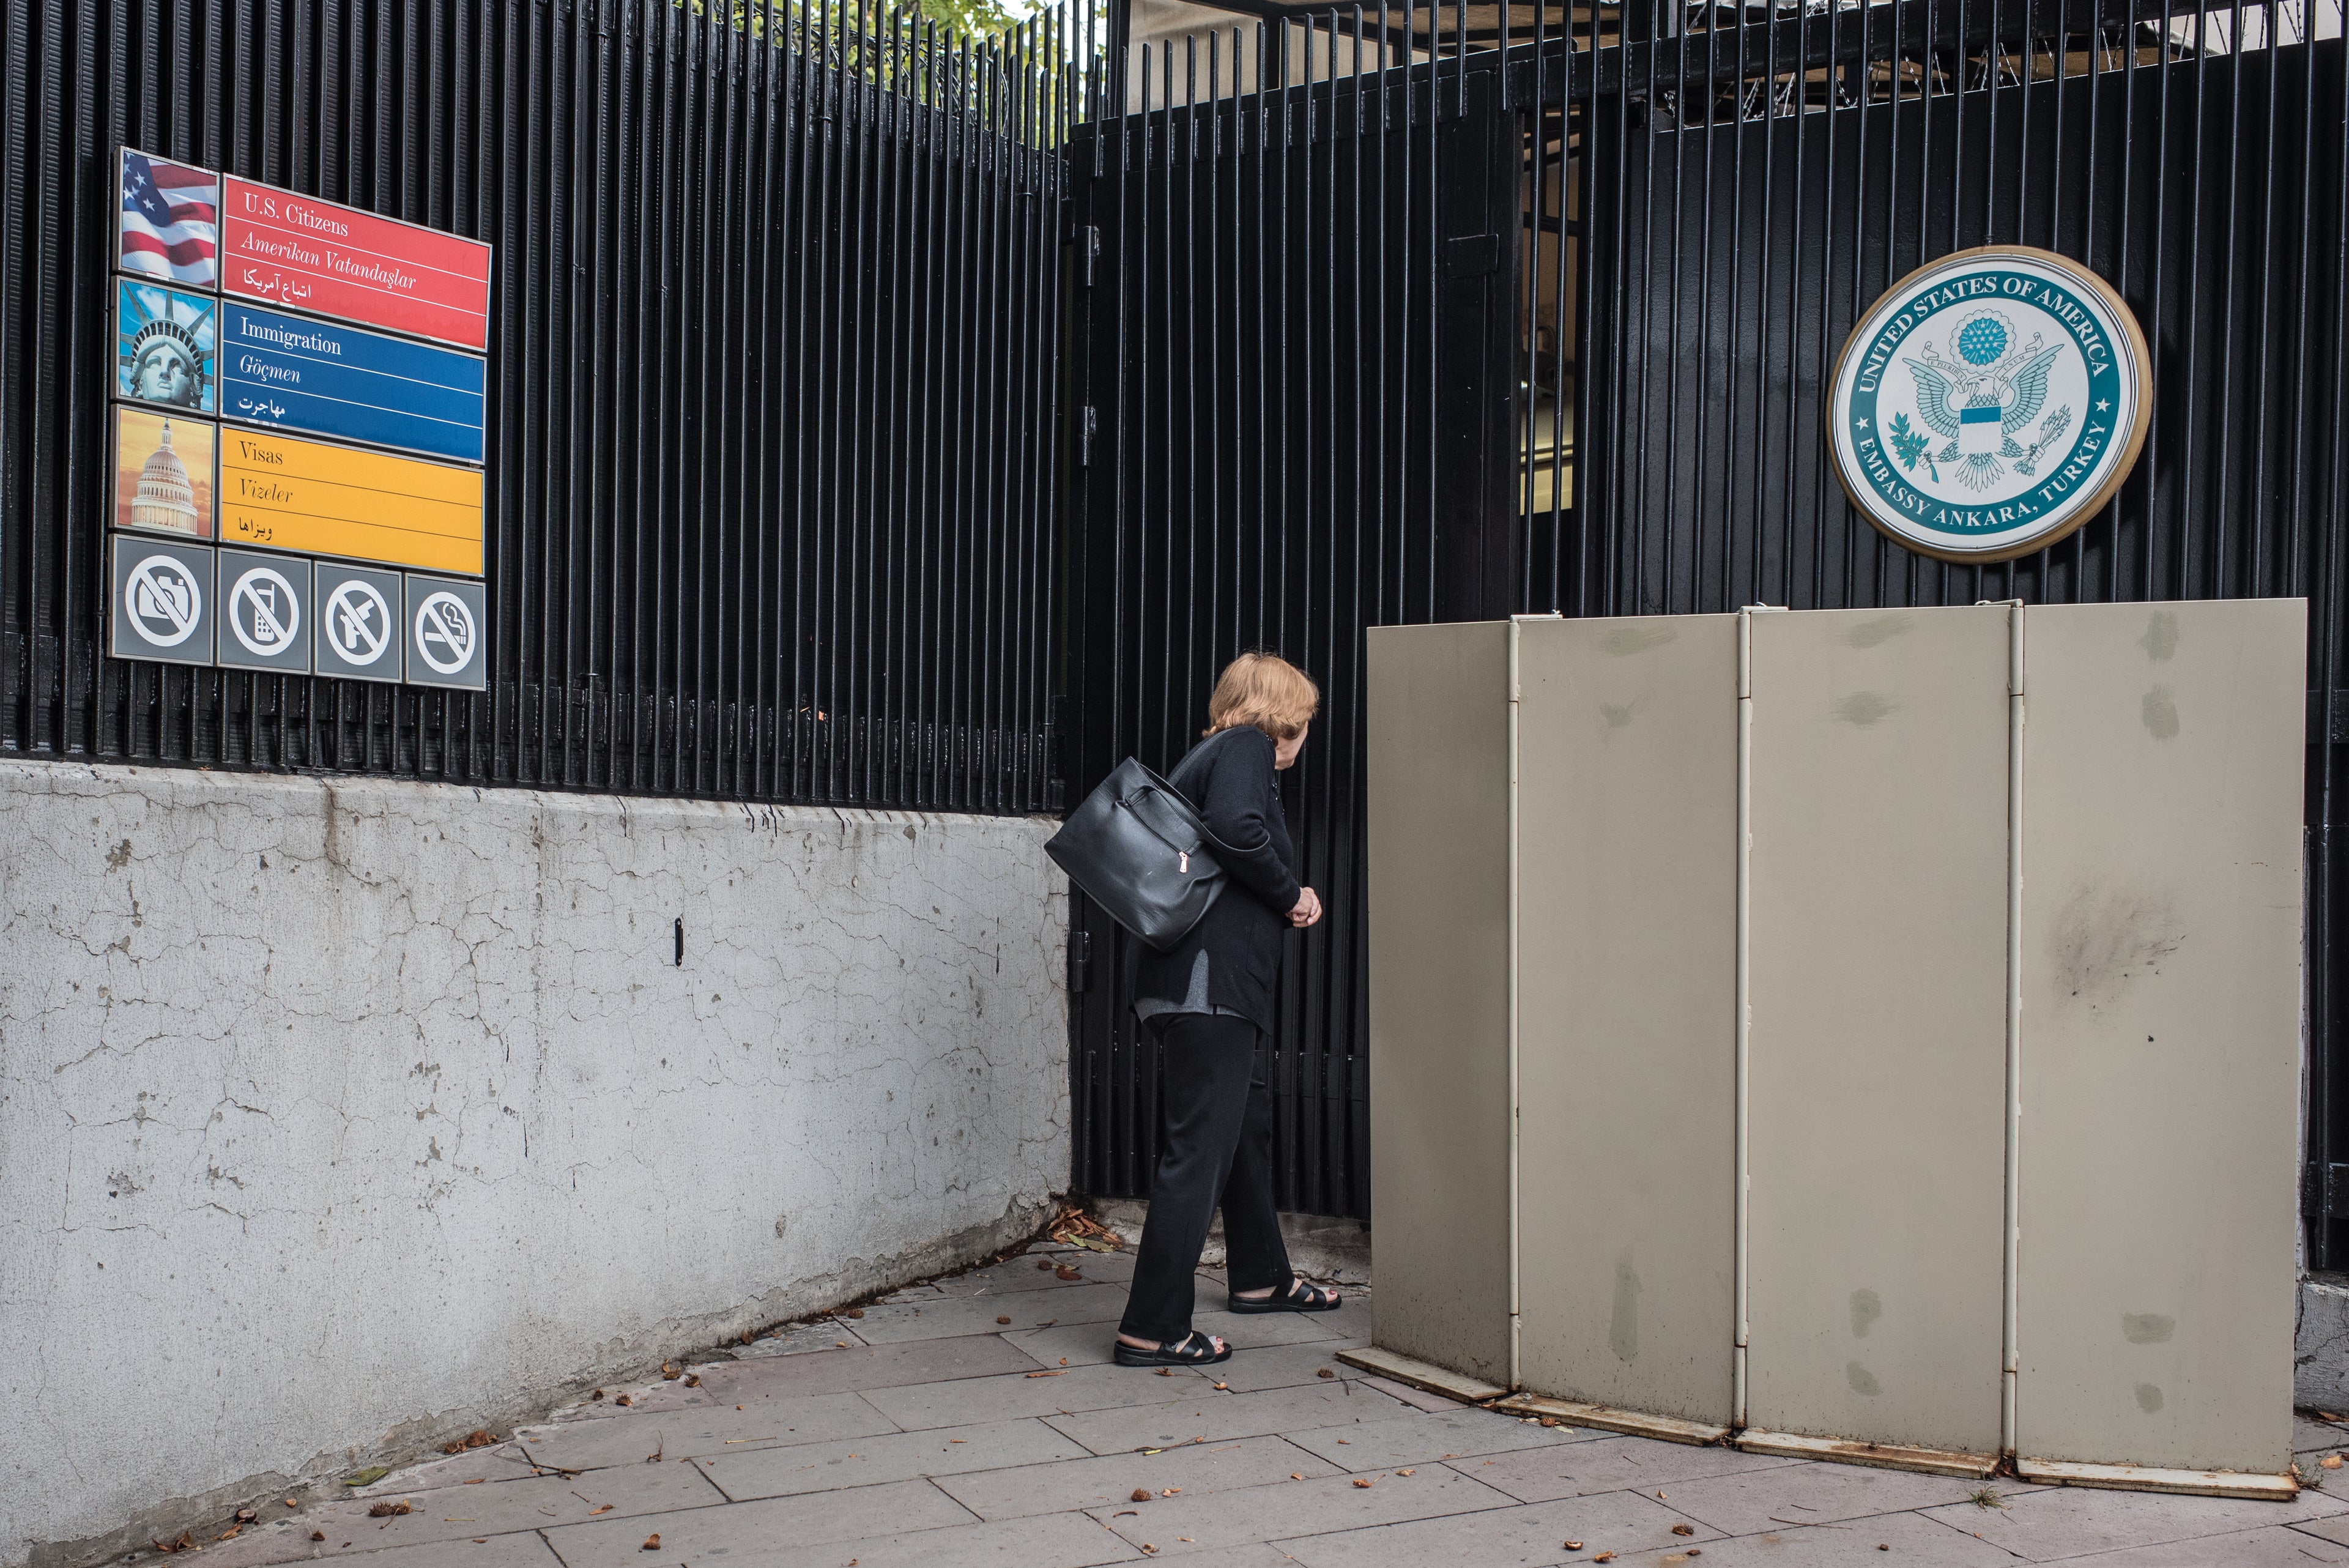 United States embassies in Turkey suspend visa services